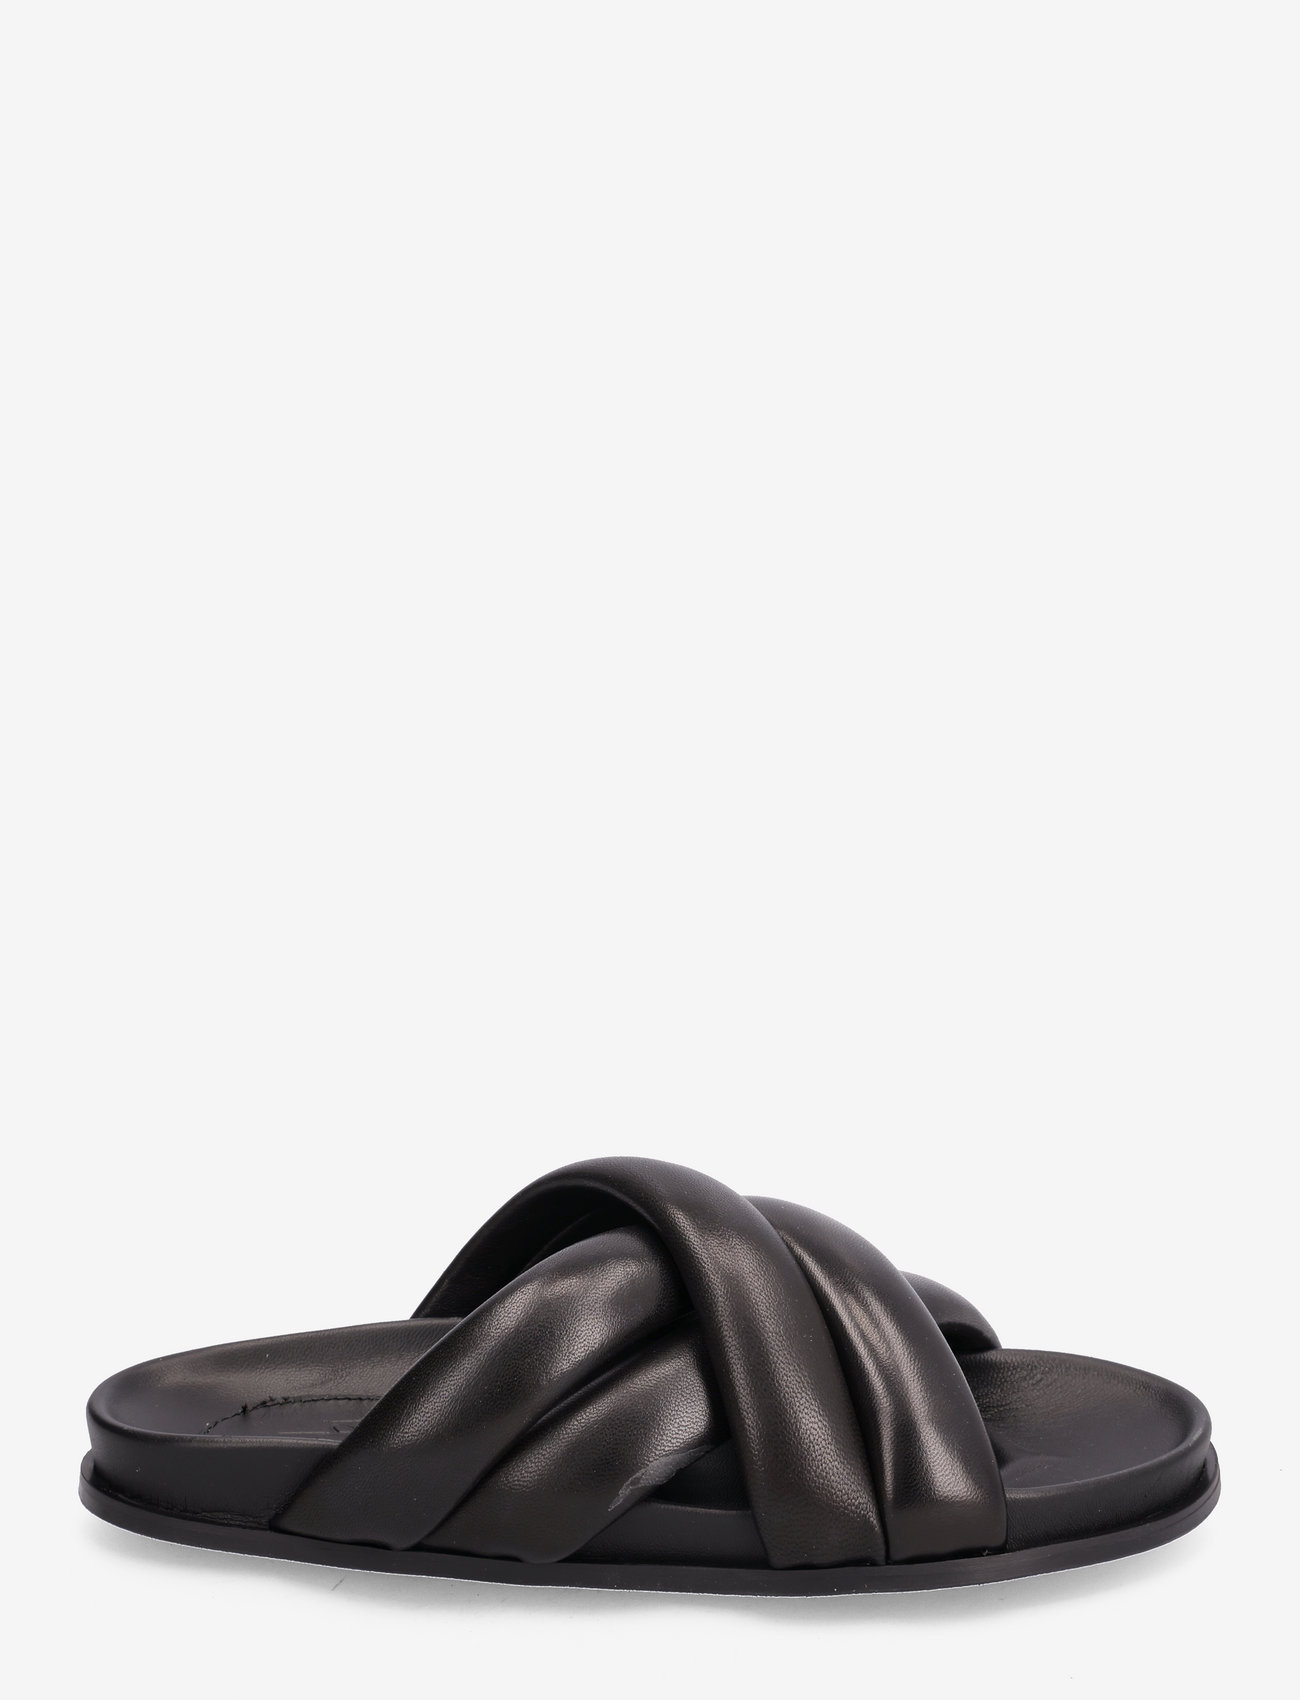 Billi Bi - C5254 - płaskie sandały - black nappa 70 - 1